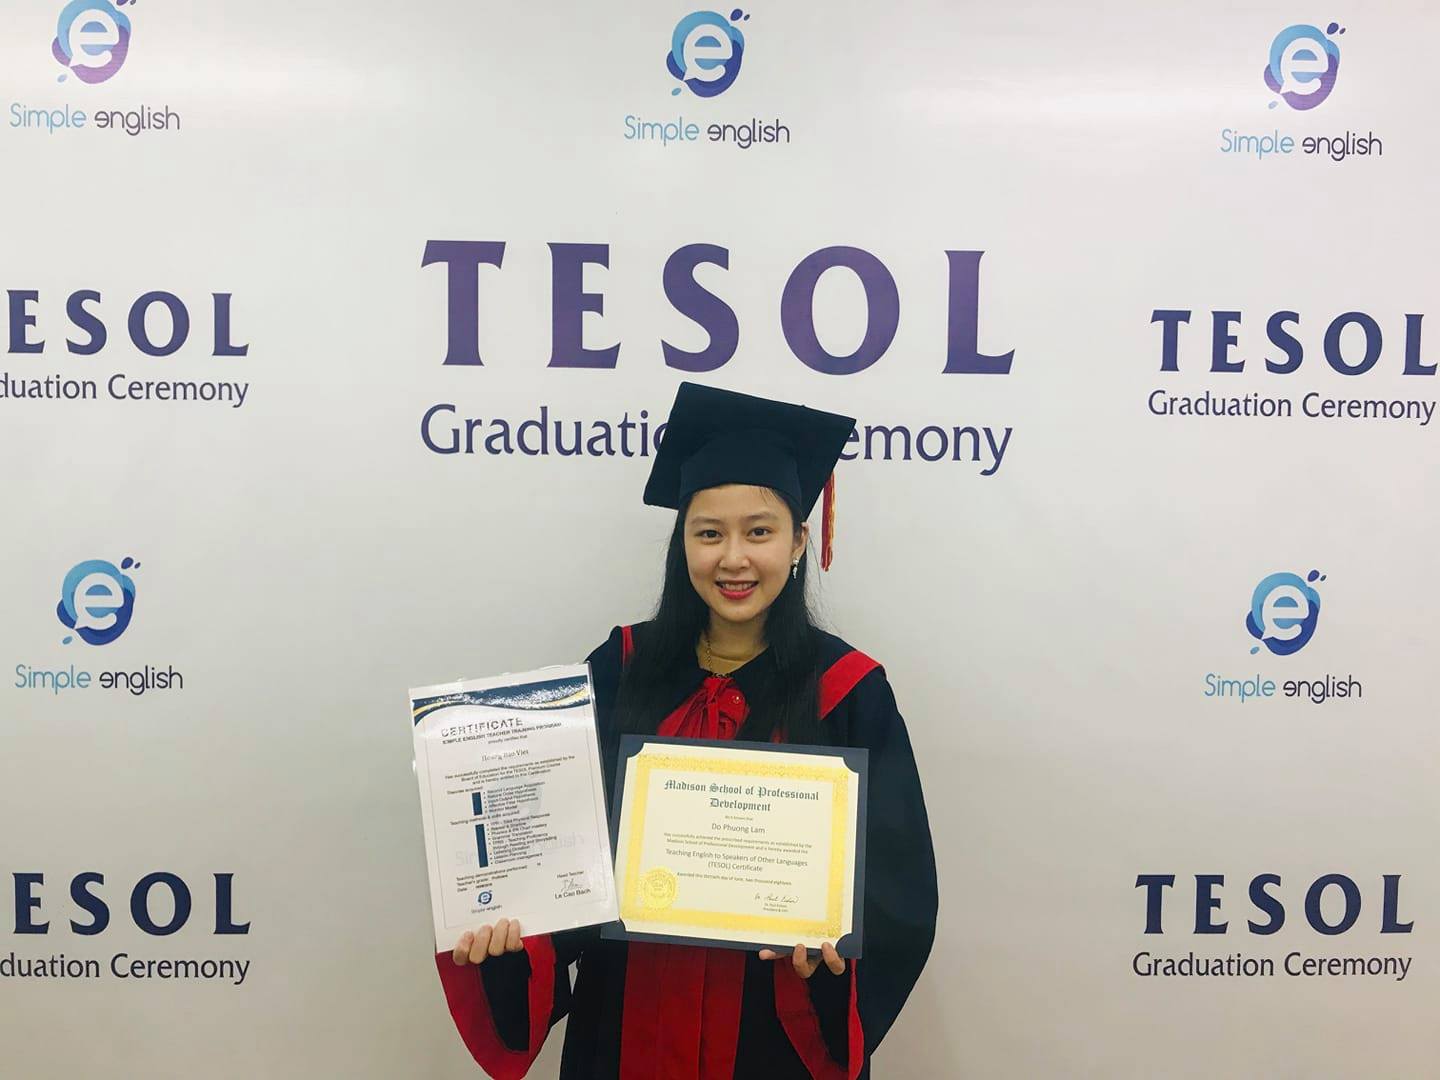 Tesol certificated teacher